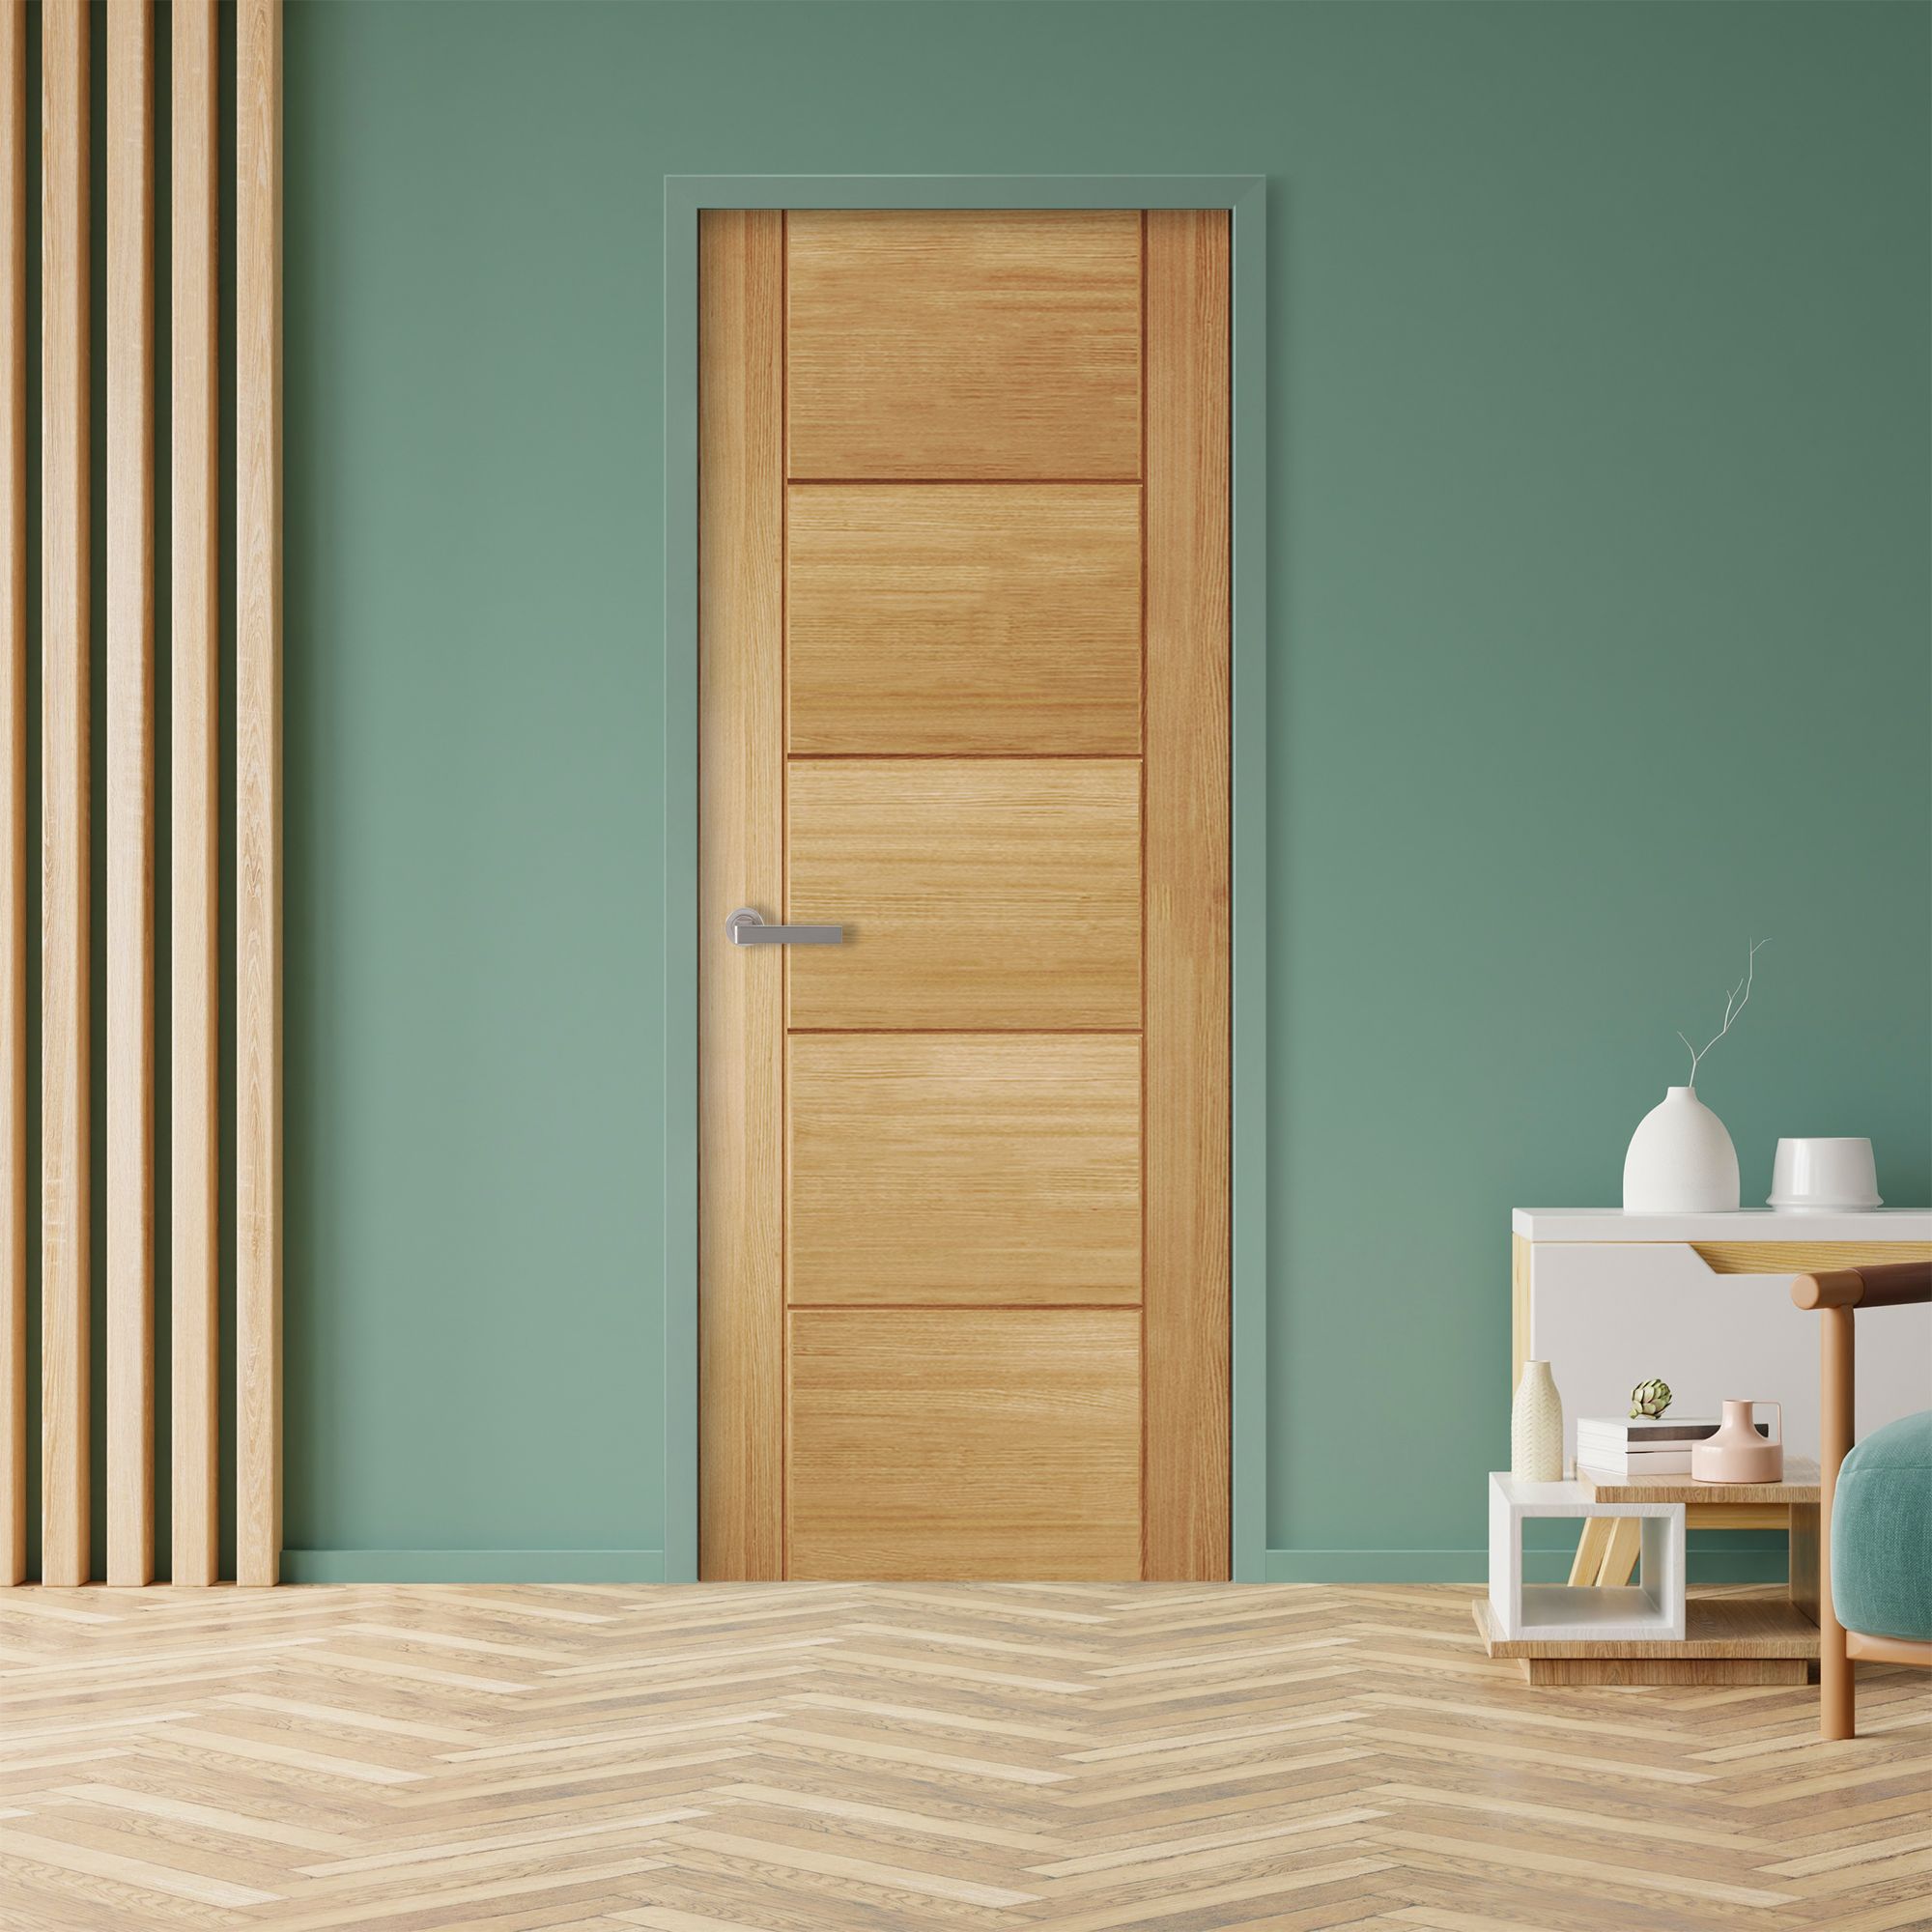 Fully finished Linear Contemporary White oak veneer Internal Door, (H)1981mm (W)610mm (T)35mm